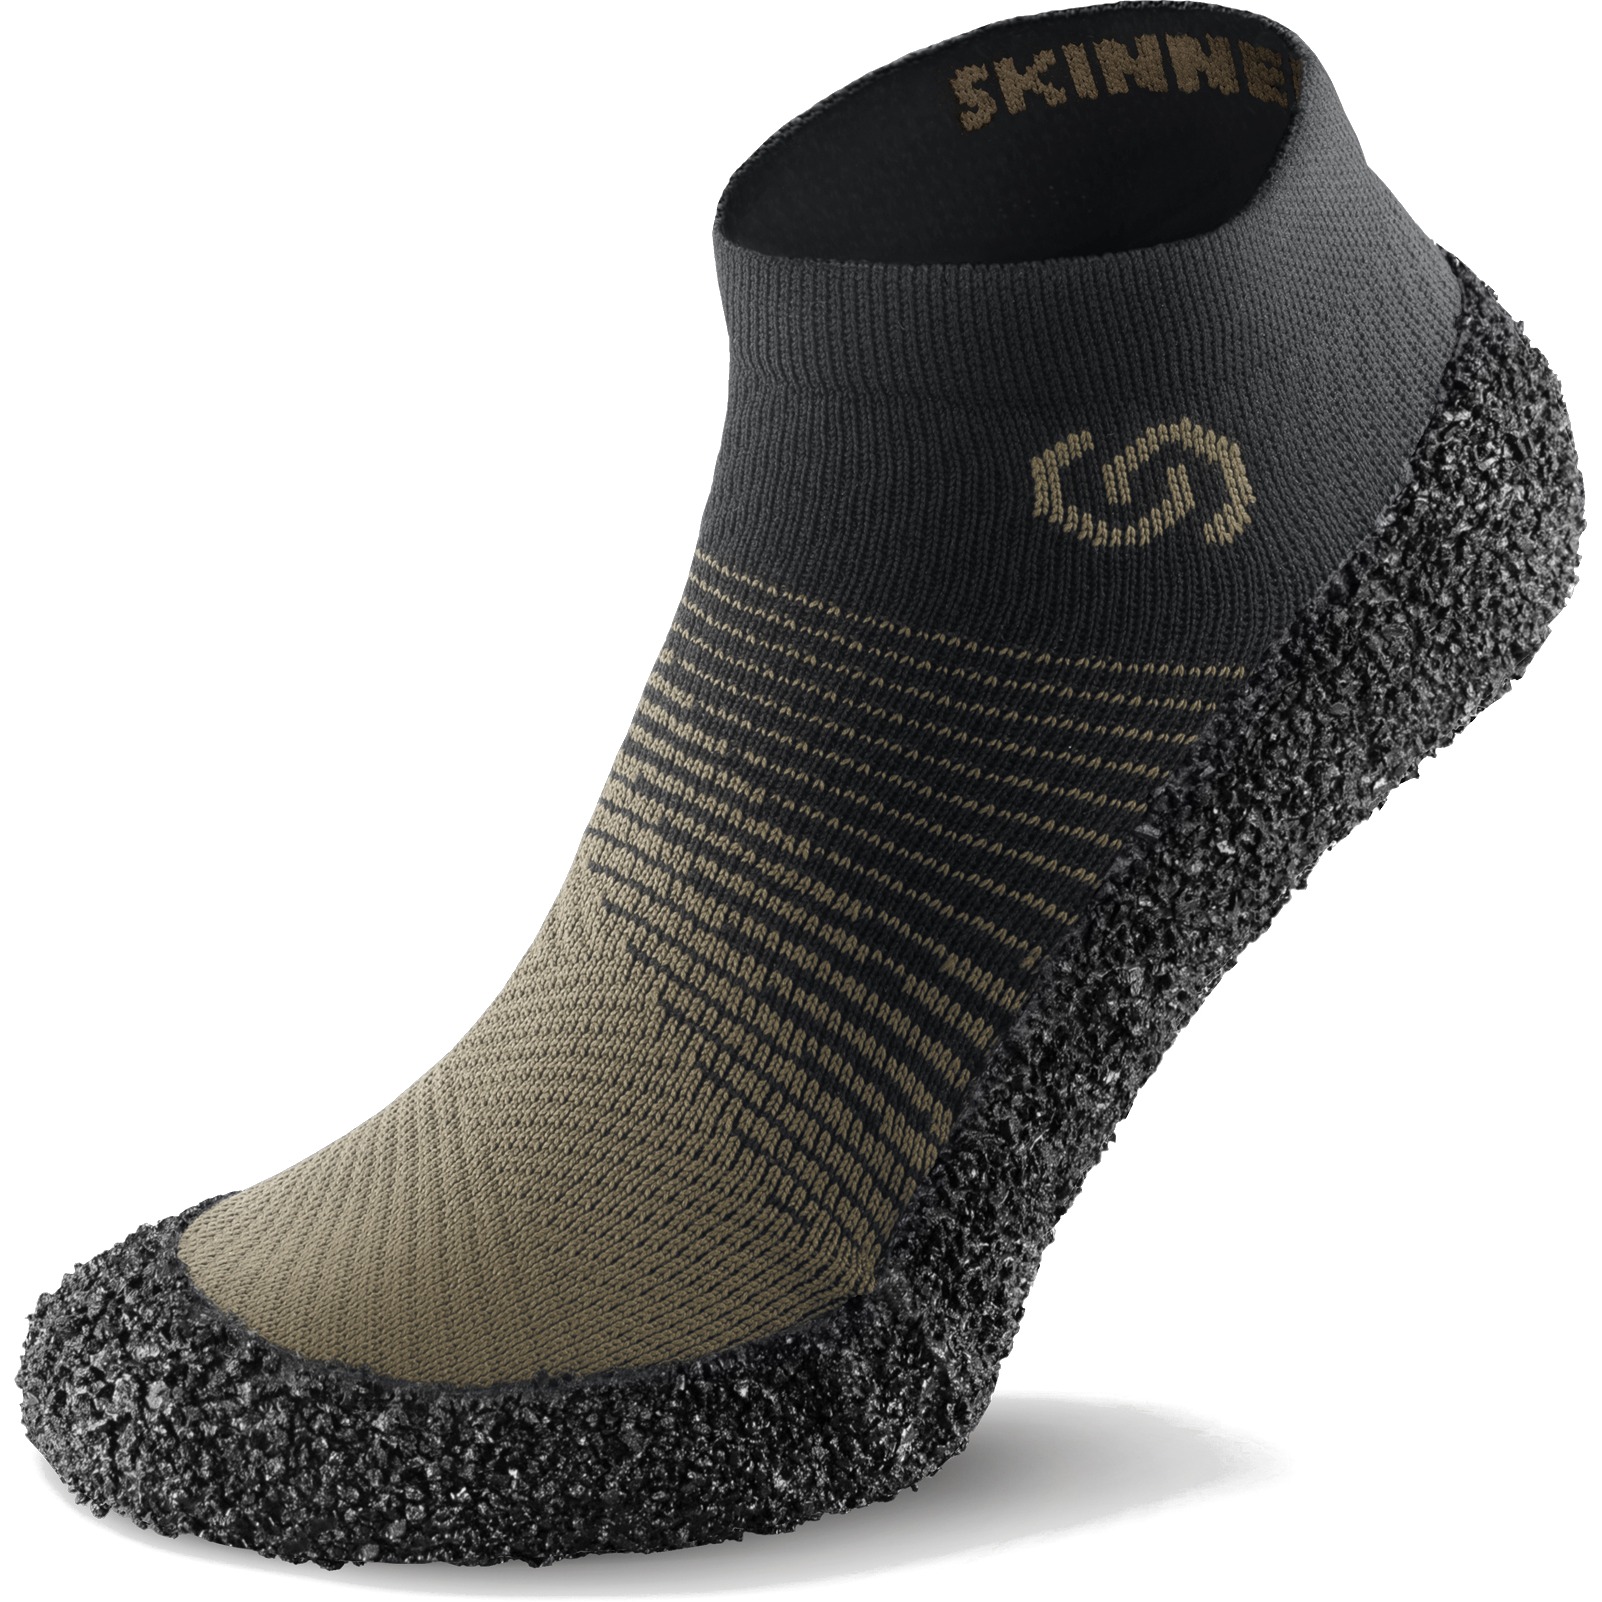 Productfoto van Skinners Sock Shoes 2.0 - moss